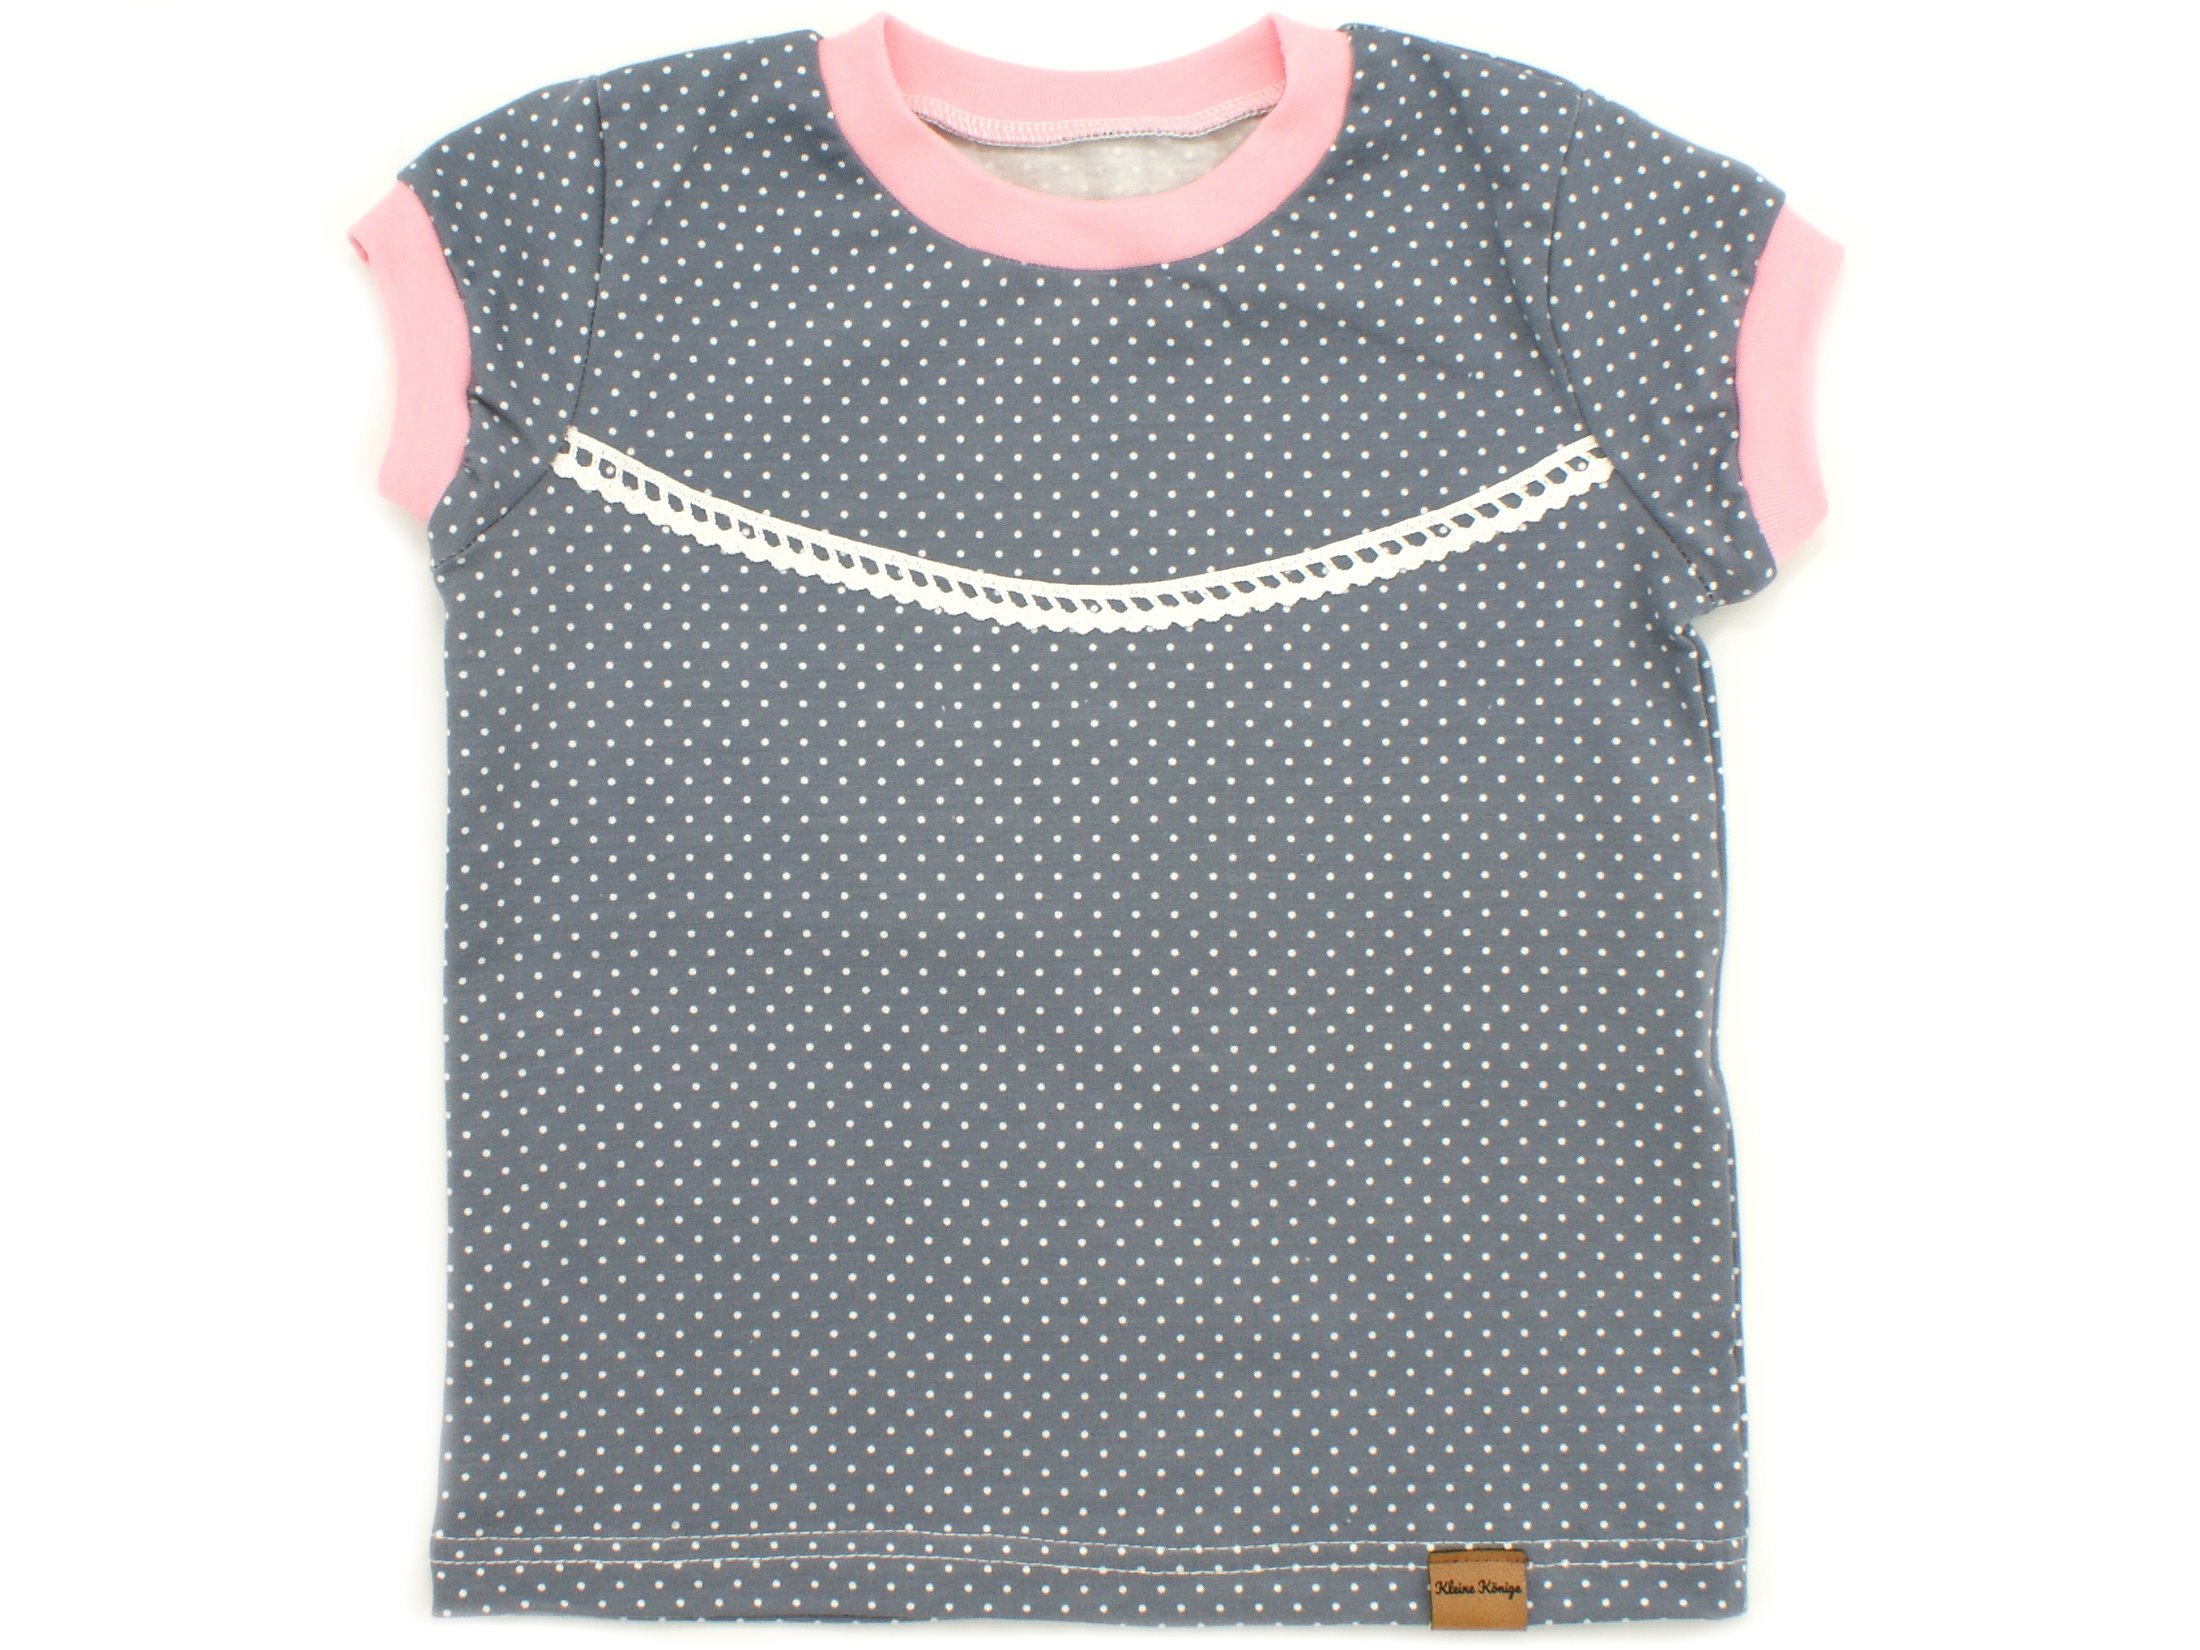 Kinder T-Shirt "Minidots" grau rosa